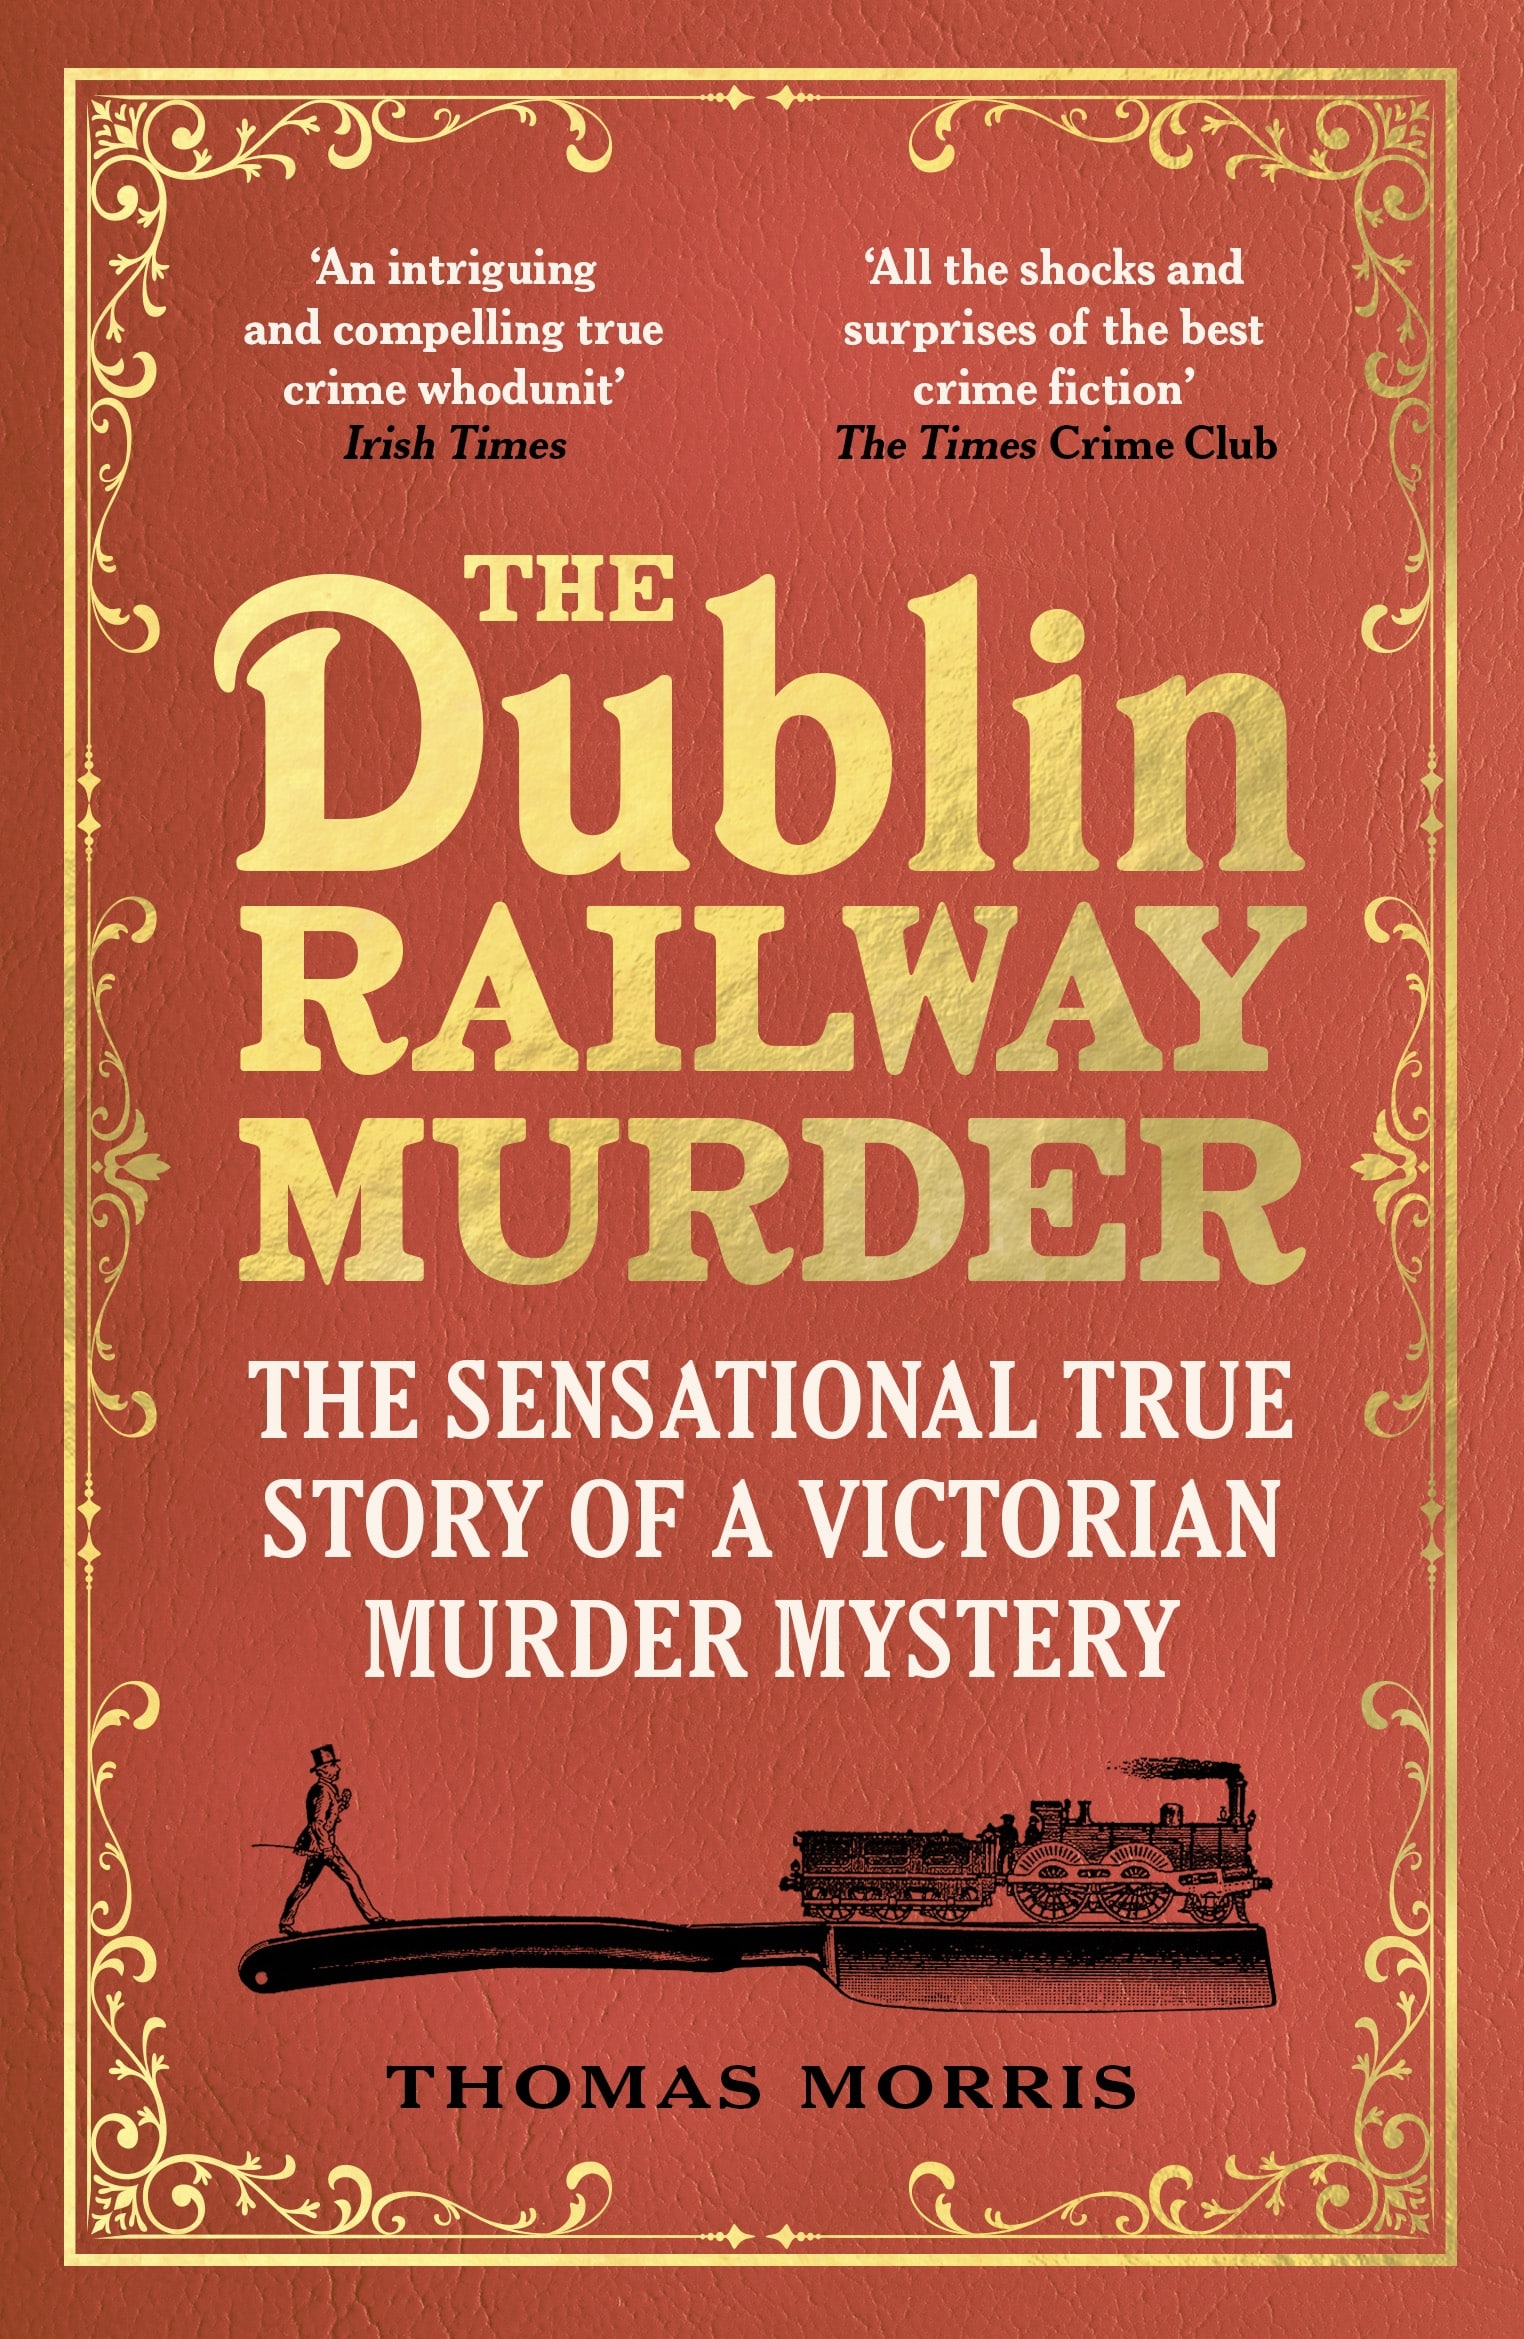 Book jacket of The Dublin Railway Murder by Thomas Morris